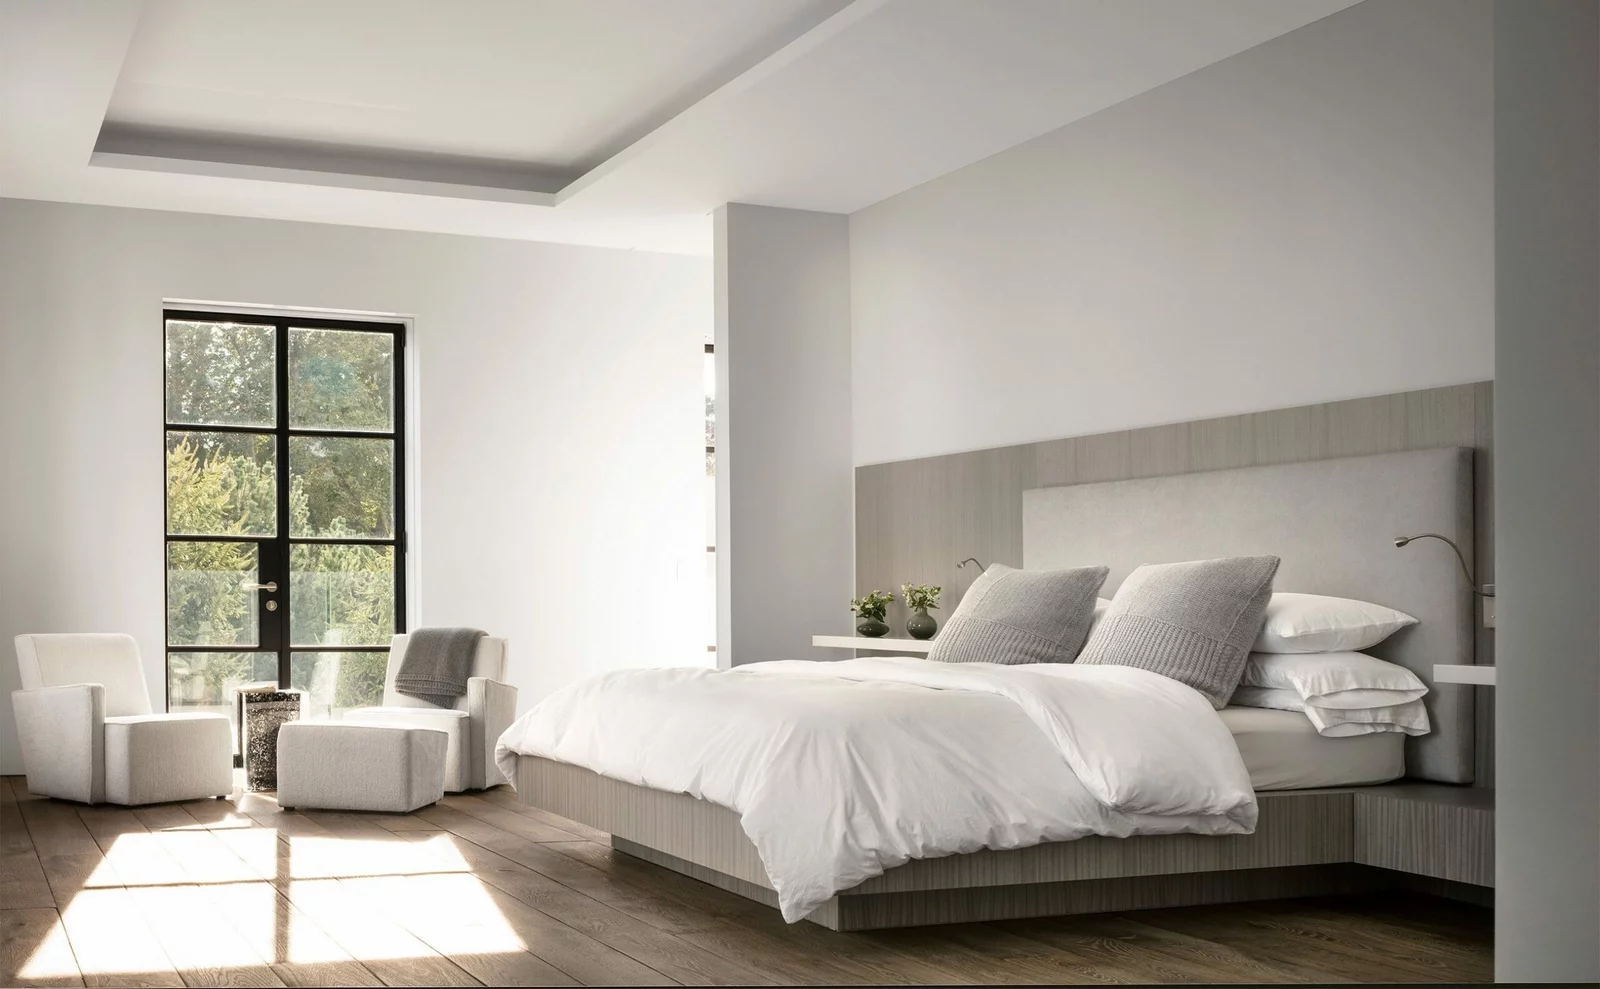 Bright and airy modern men's bedroom interior design